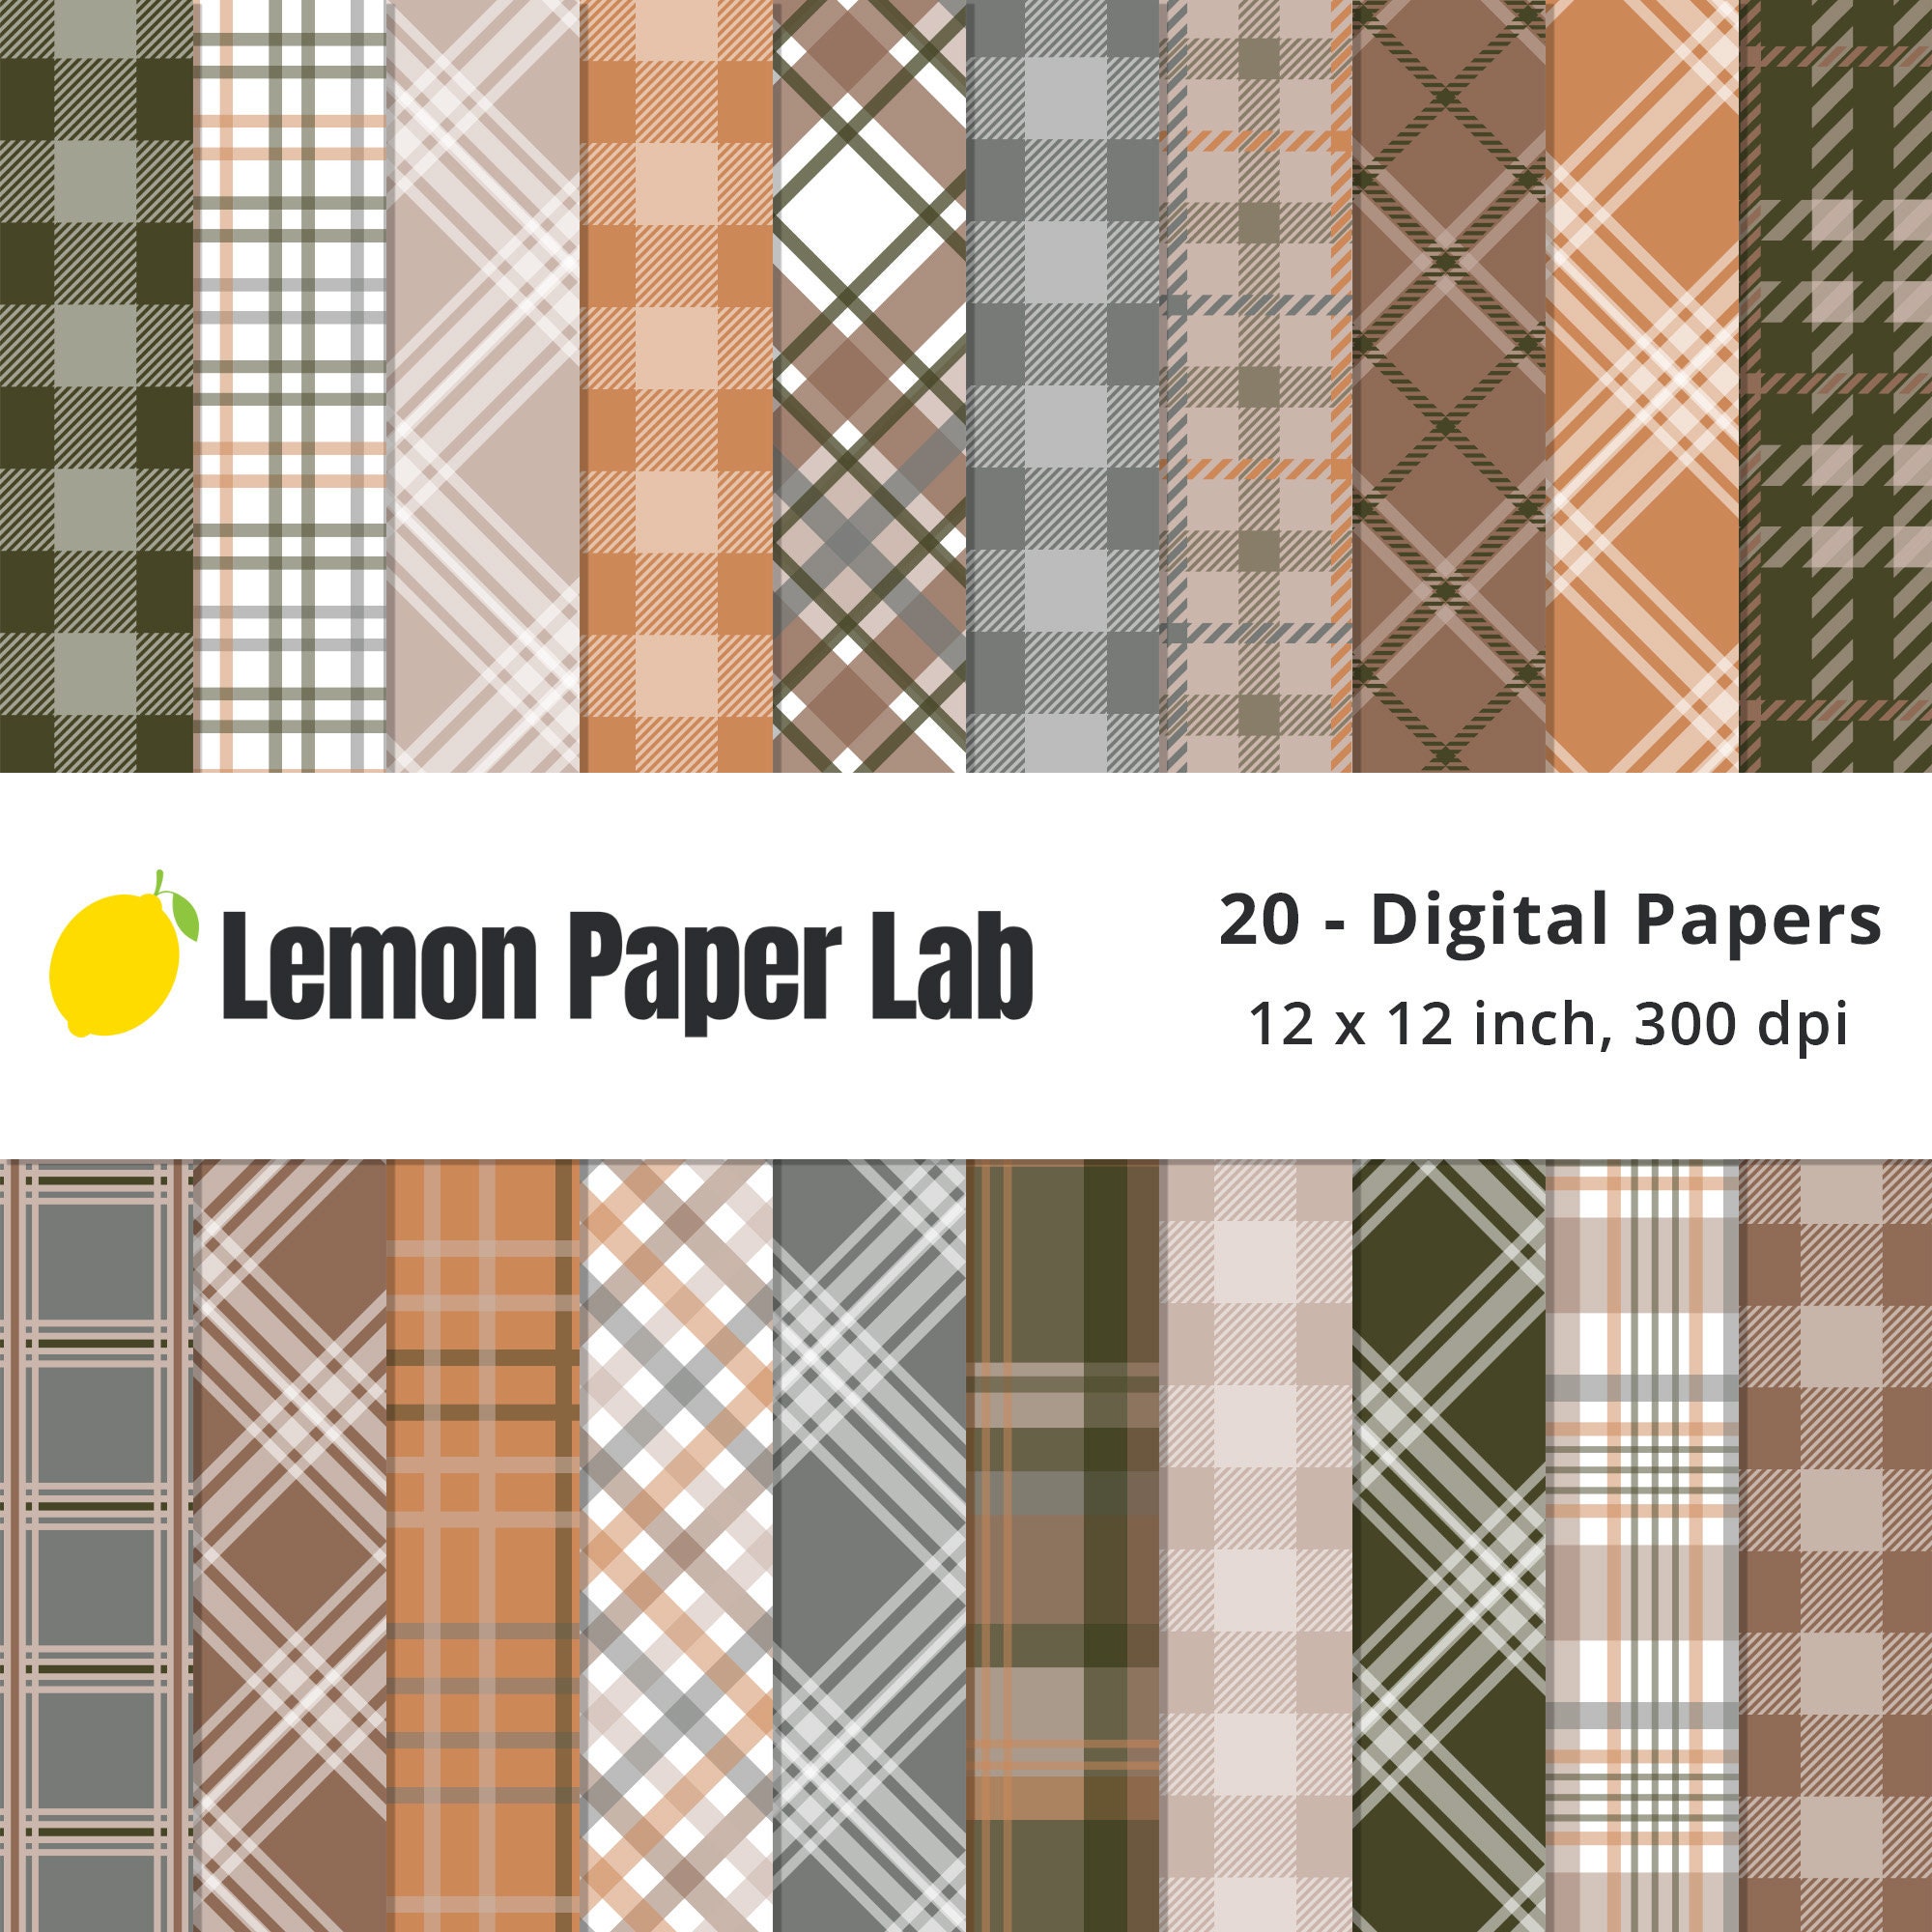 Summer Plaid Scrapbook Patterned Paper Graphic by Lemon Paper Lab